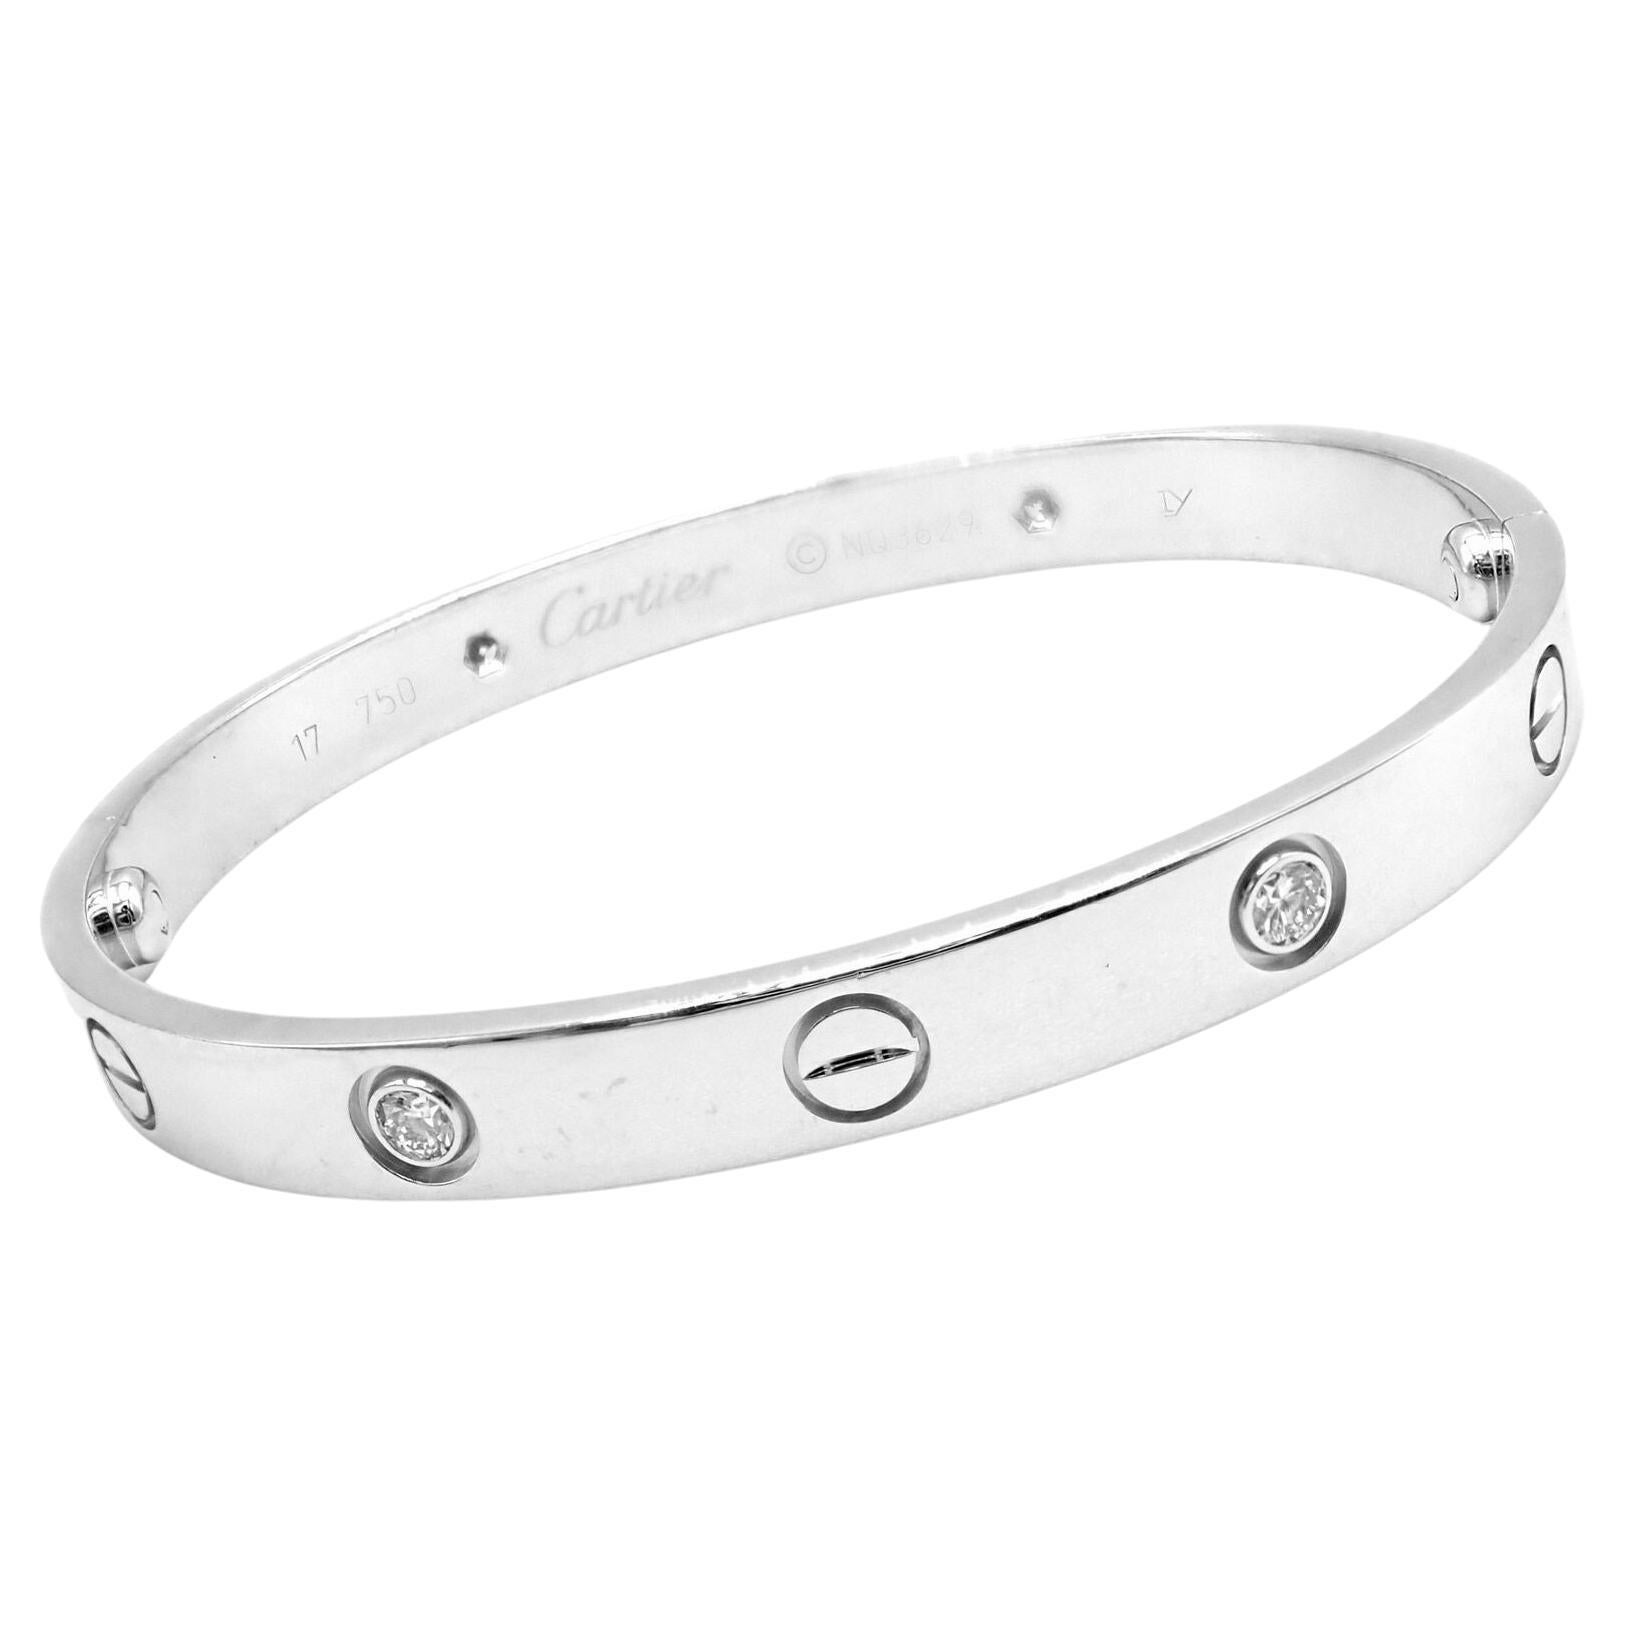 When did Cartier change the Love bracelet?